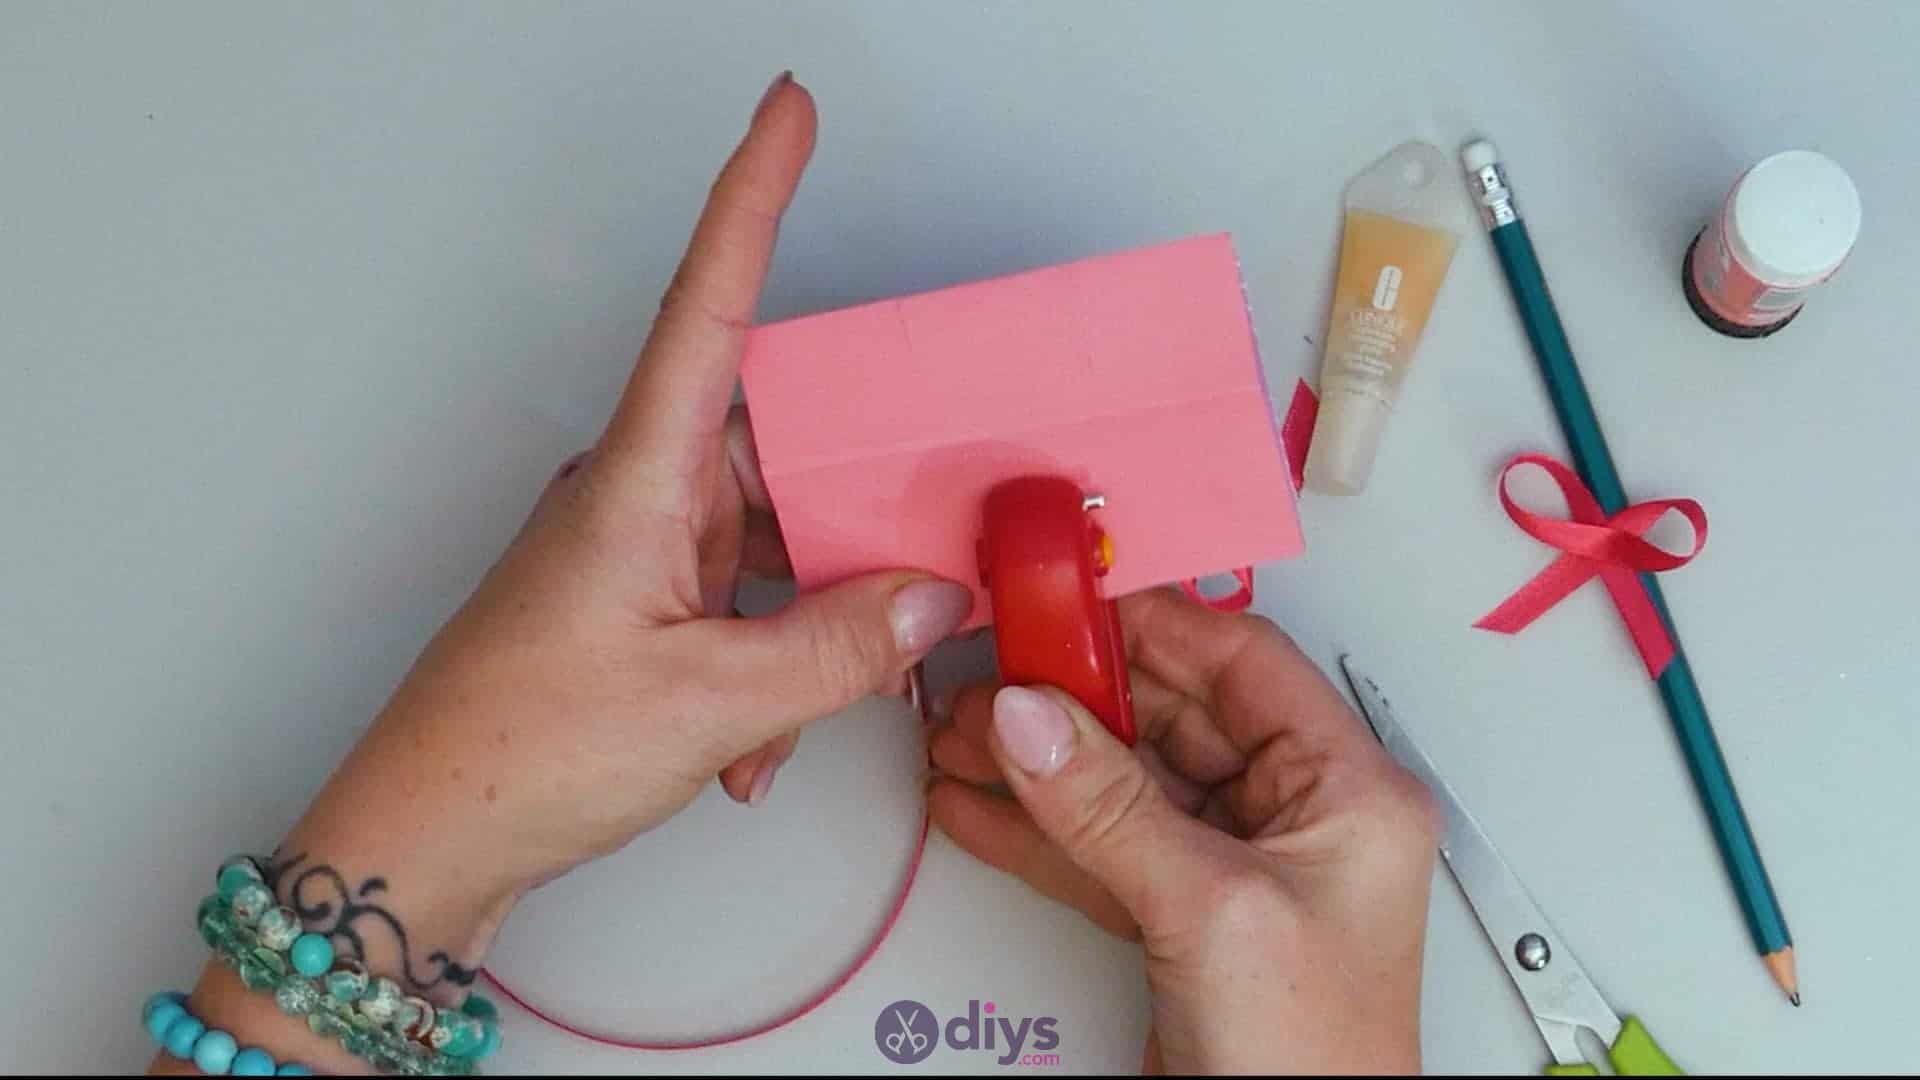 Diy lipstick gift card step 9